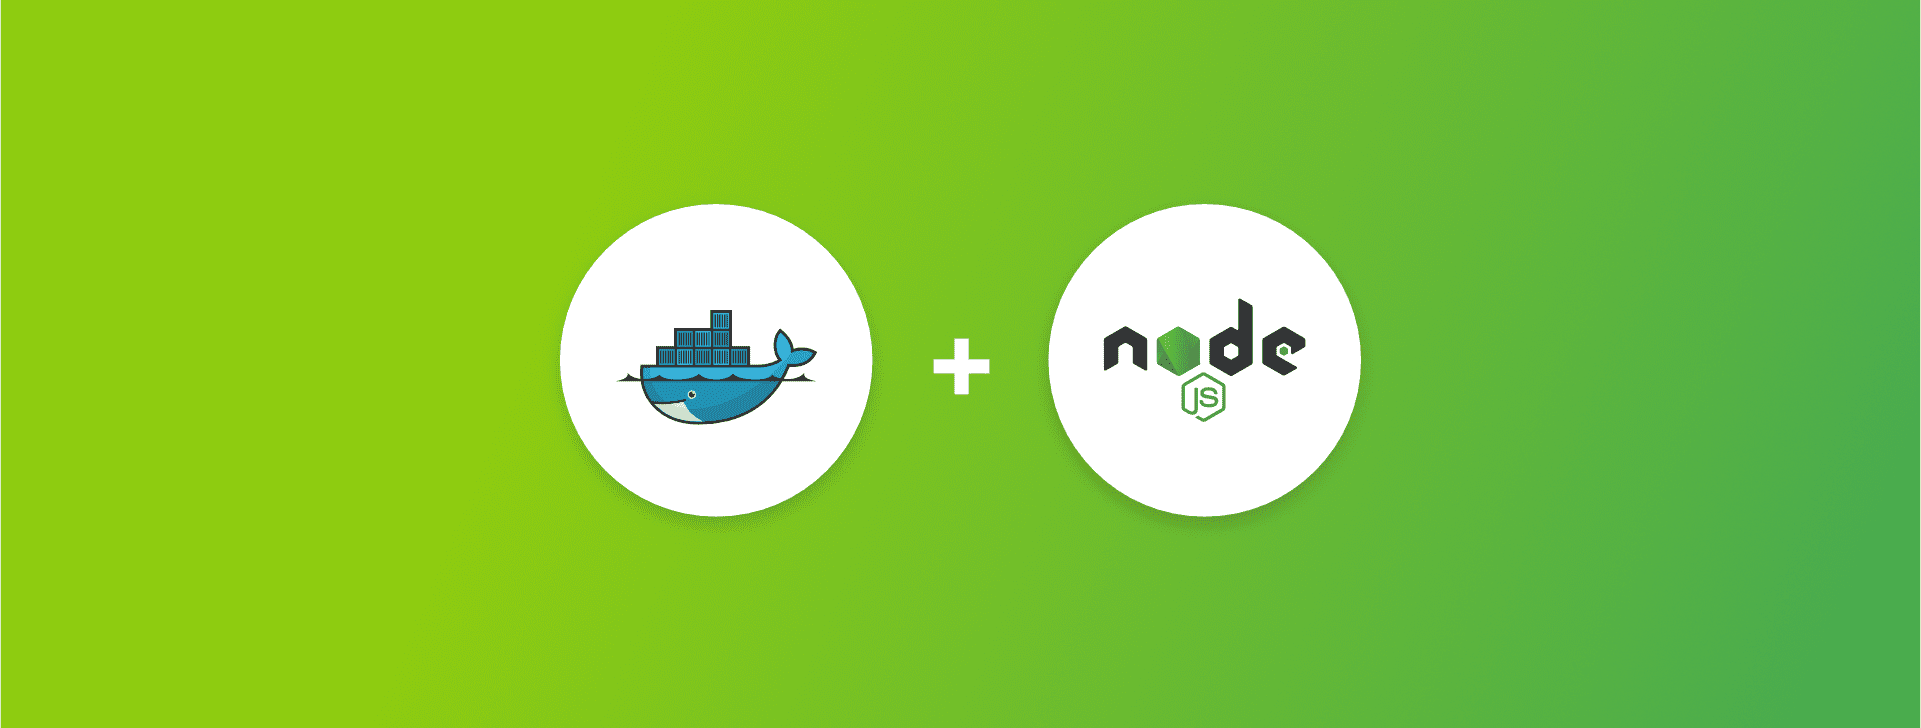 Docker with node